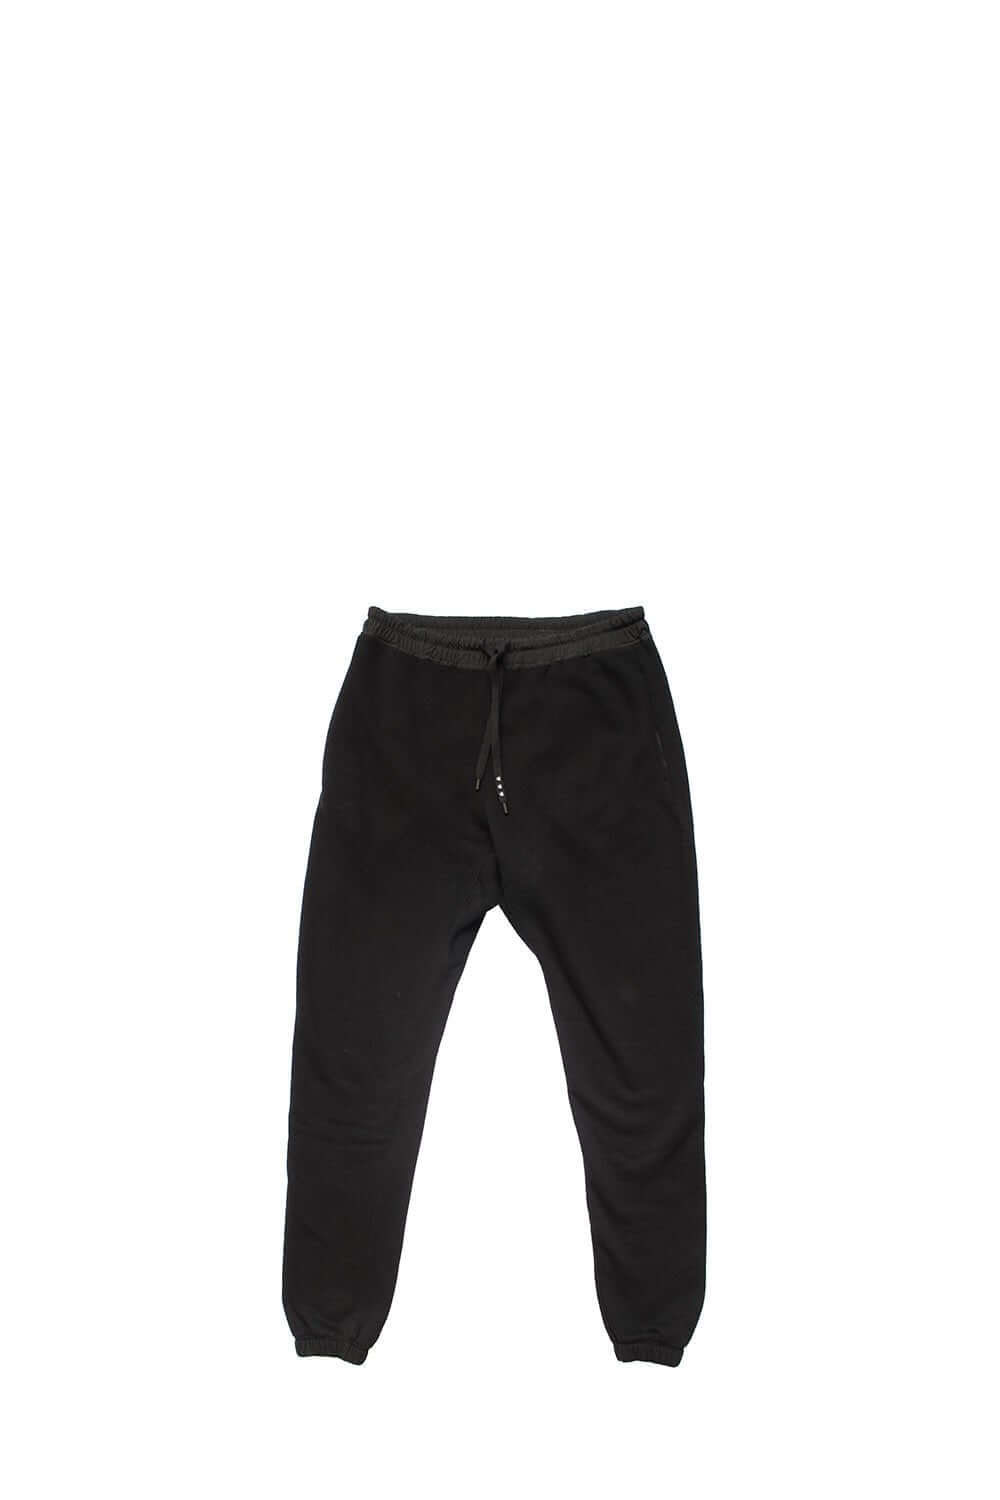 HTC BASIC PANTS Black basic pants. Elastic waistband with drawstring. Side pockets. 93% Viscose 7% Elastane. Made in EU HTC LOS ANGELES